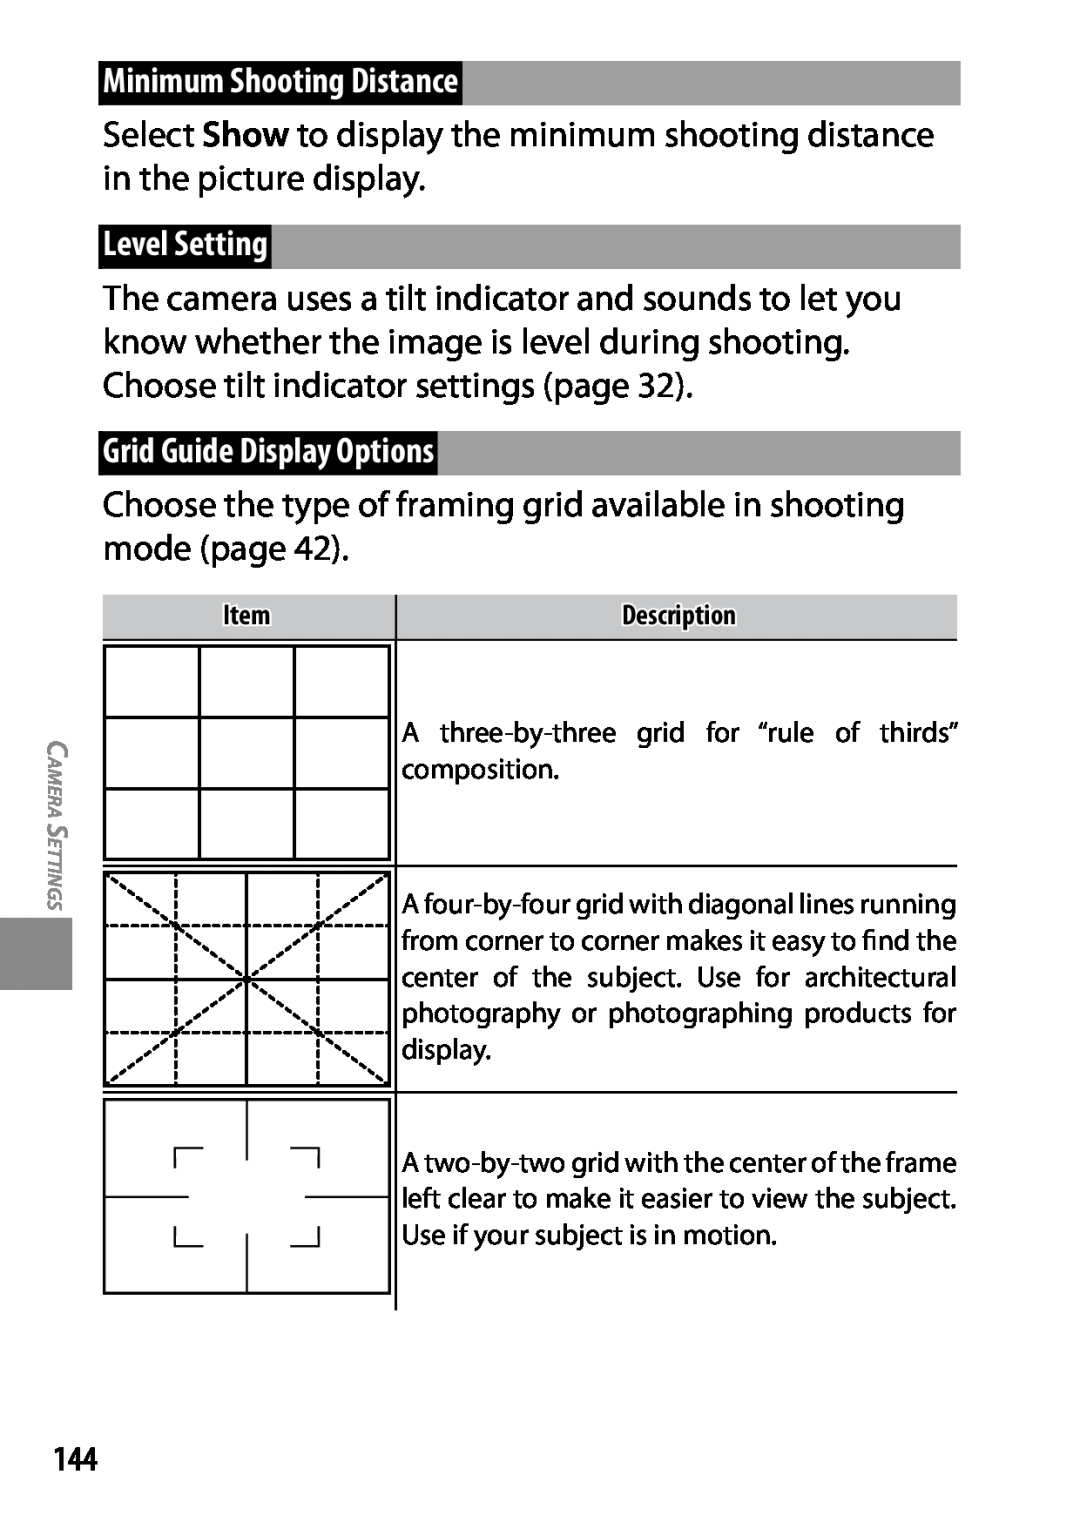 Ricoh GXR, 170543, 170553 manual Minimum Shooting Distance, Level Setting, Grid Guide Display Options 